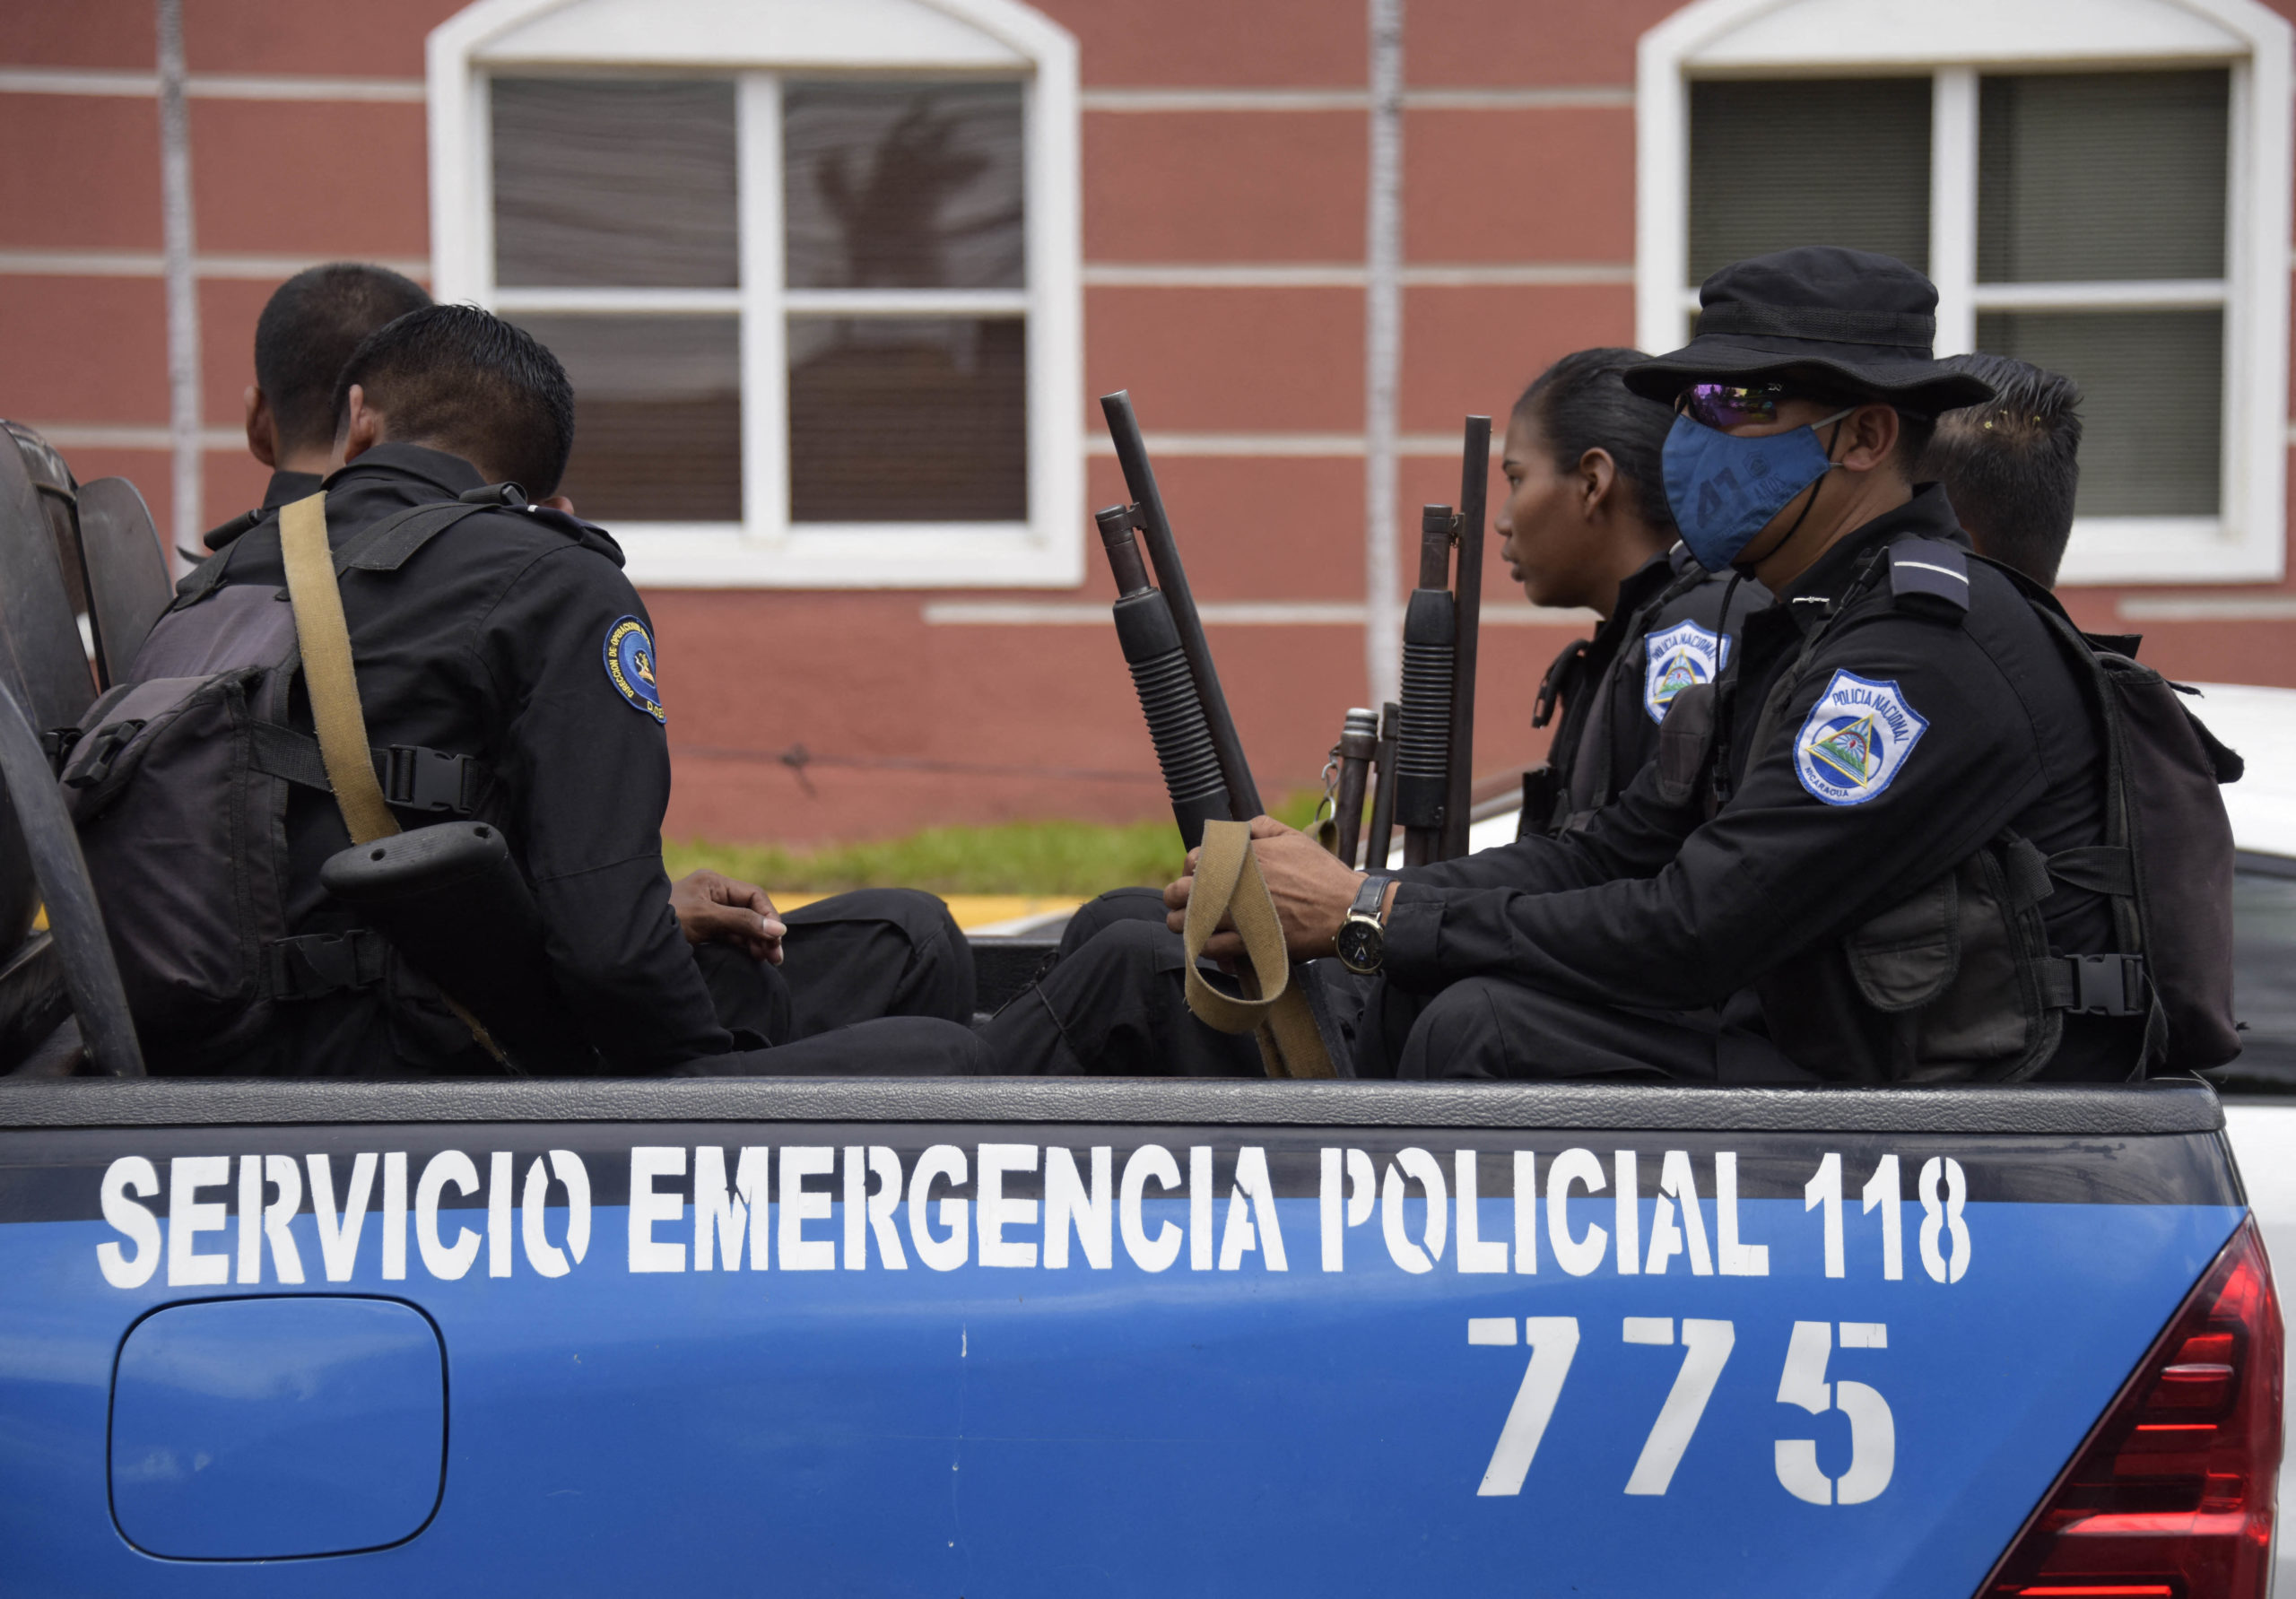 Daniel Ortega Increases Repression to Ensure Reelection